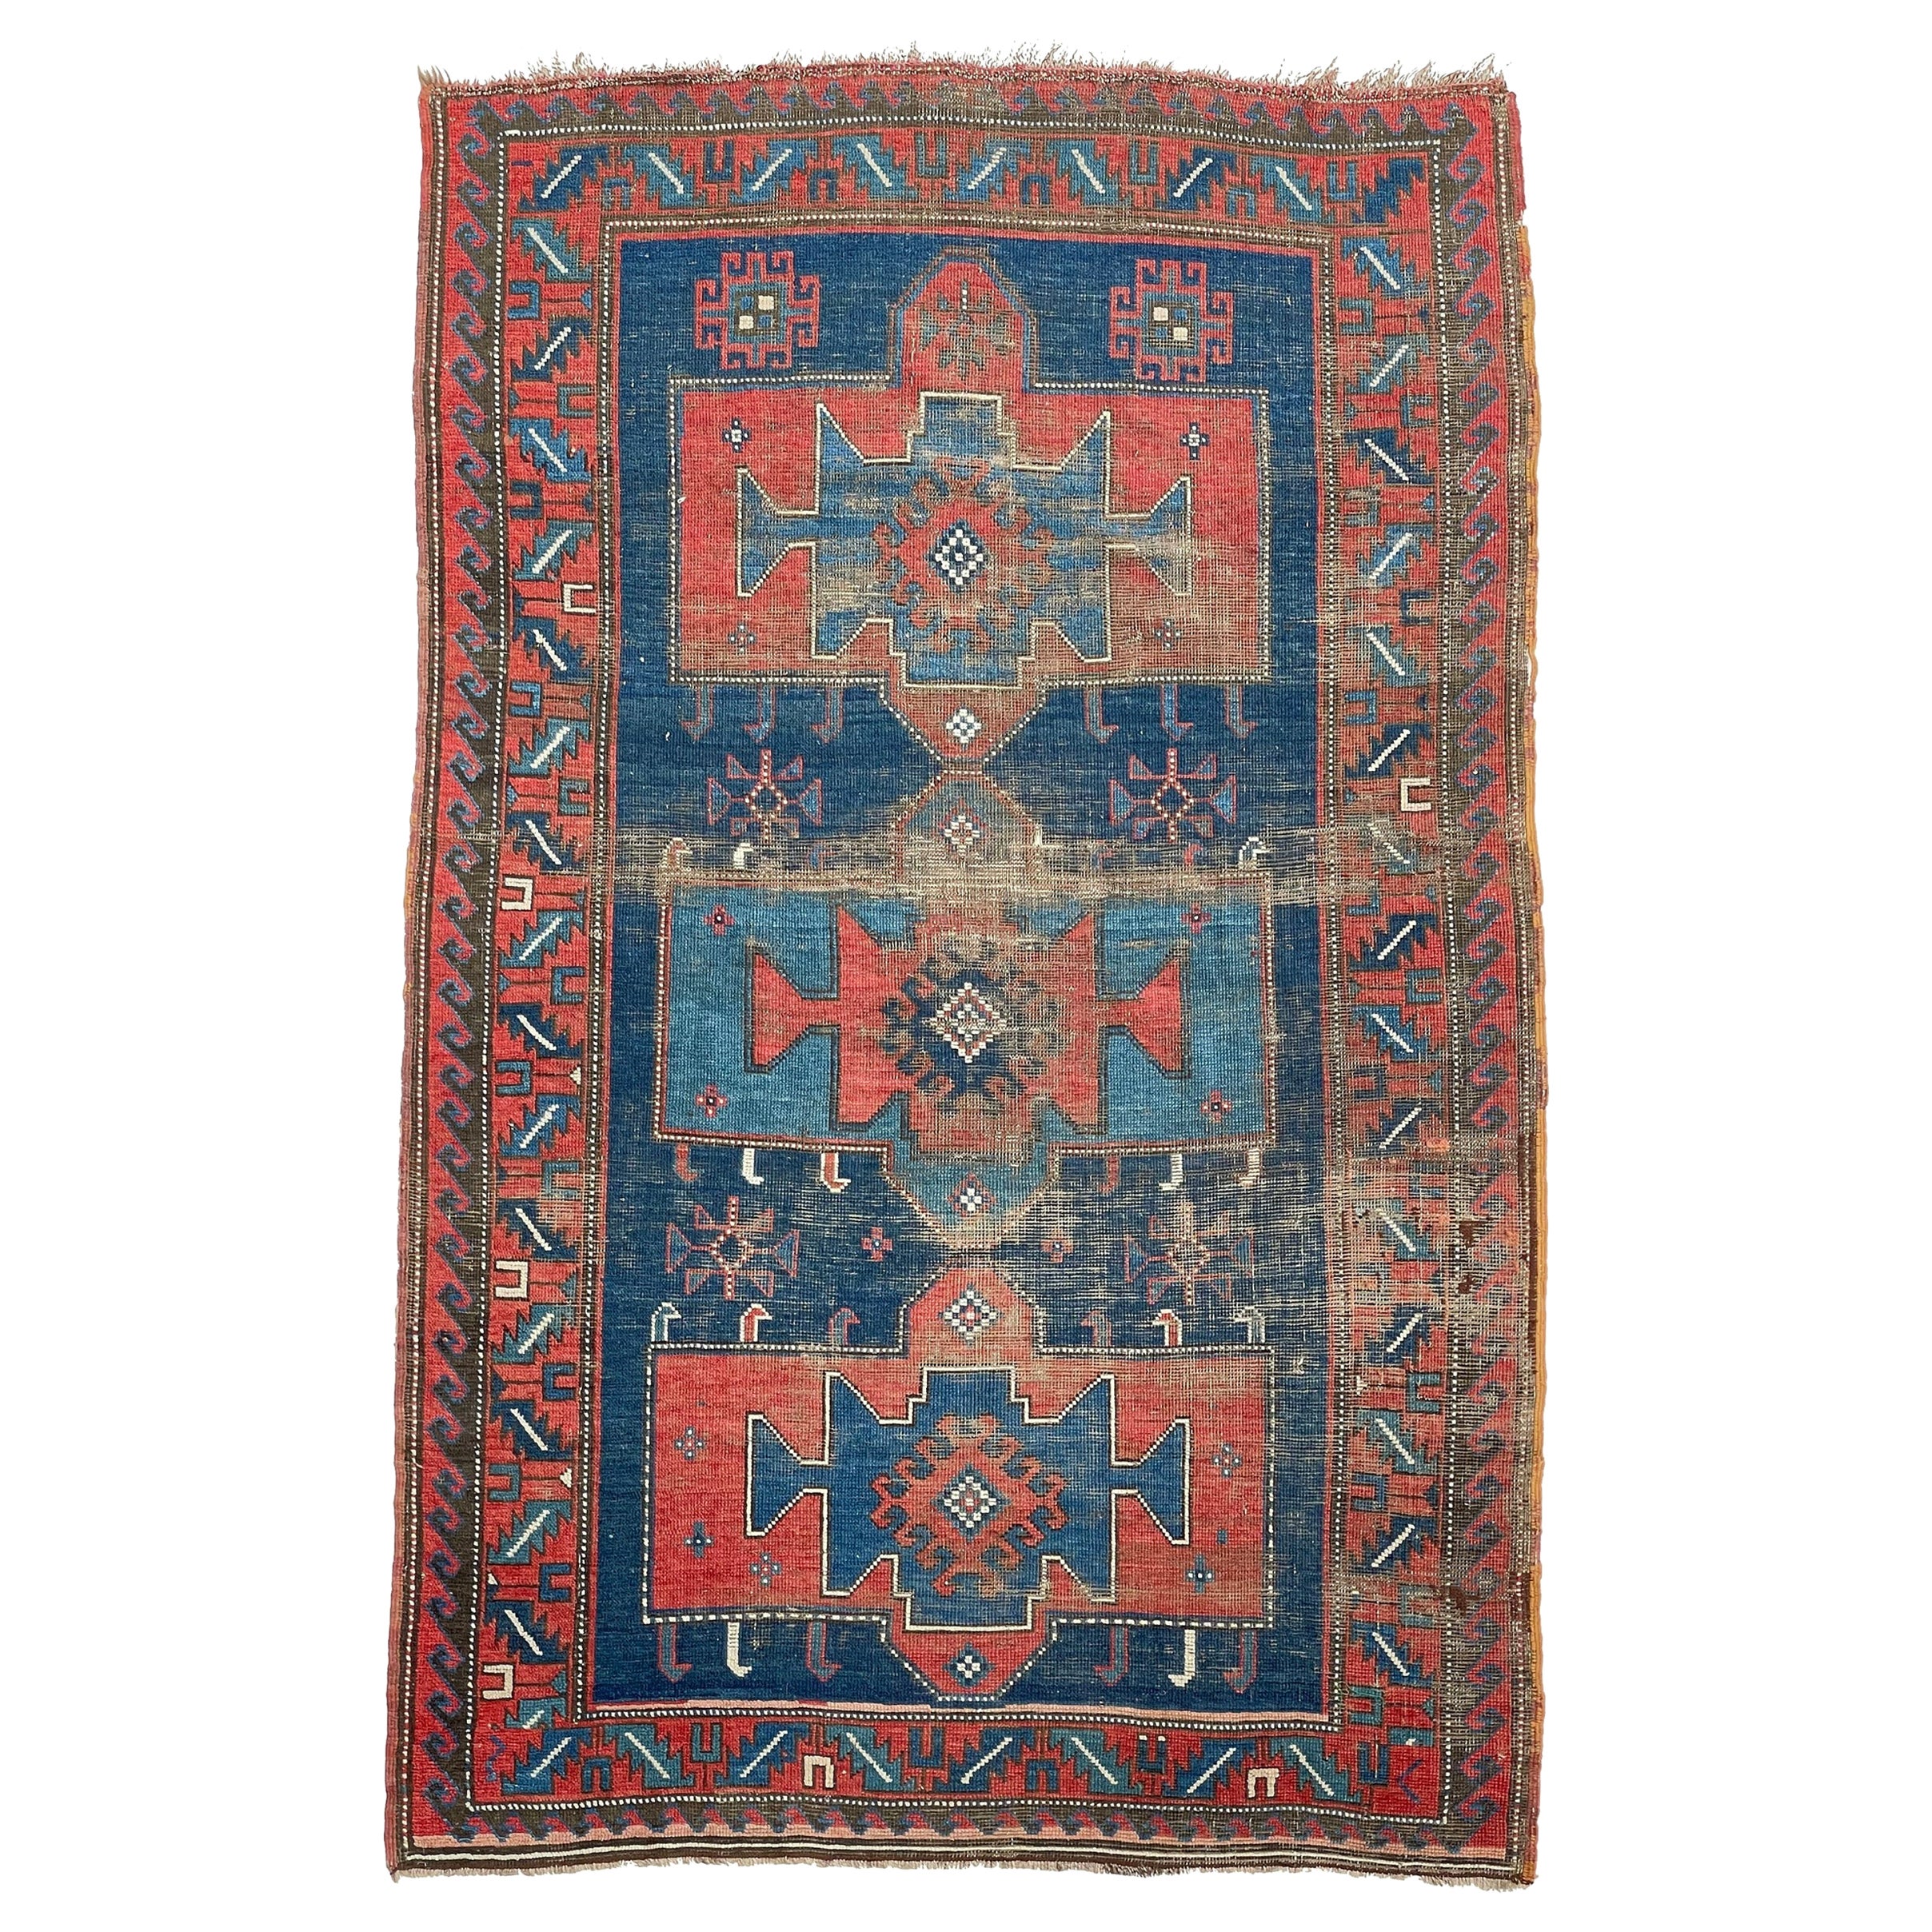 Old World Sensational Antique Caucasian Geometric Antique Kazak Tribal Rug